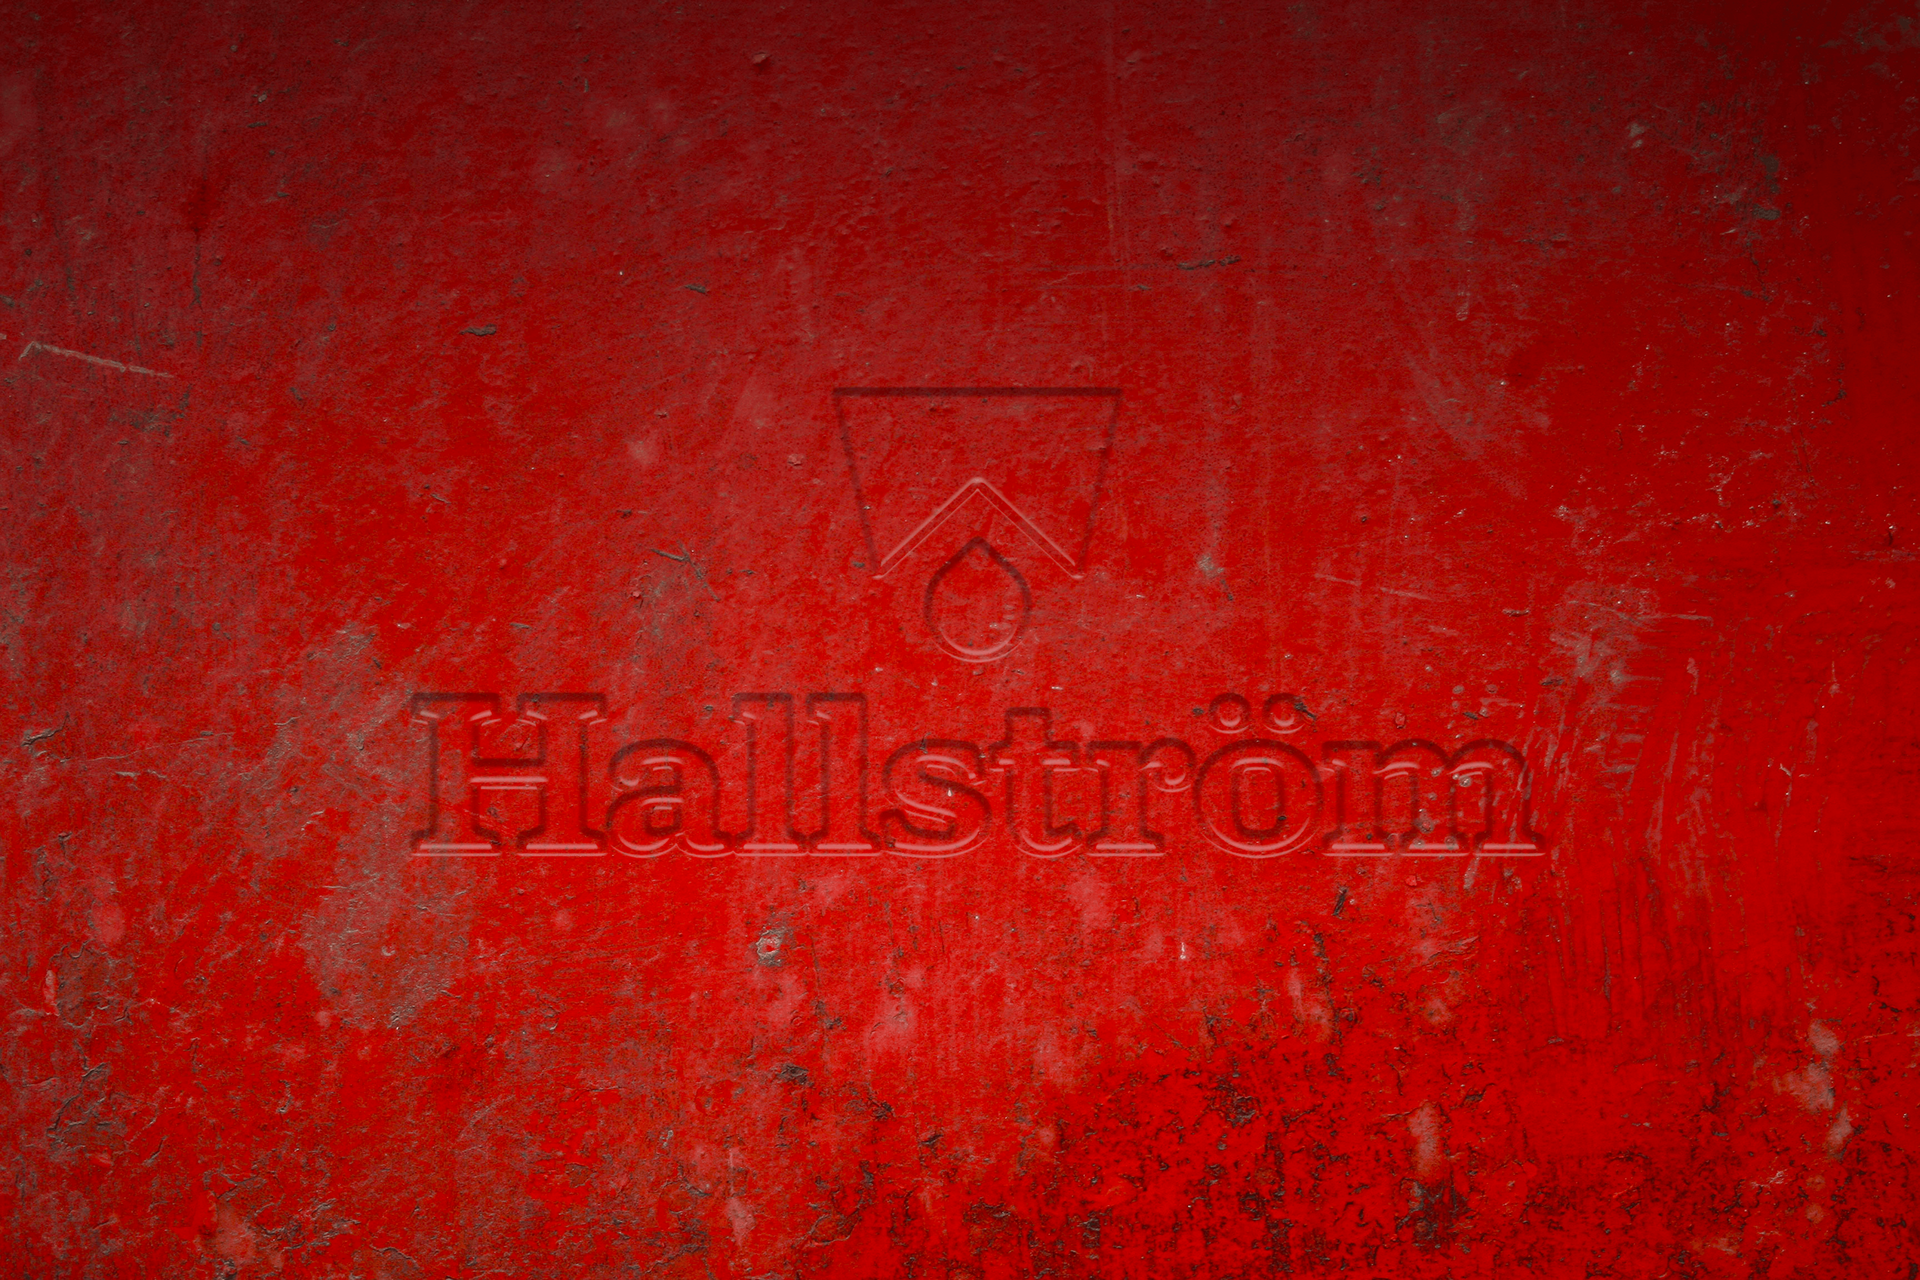 HALLSTROM - Joseph Hillenbrand